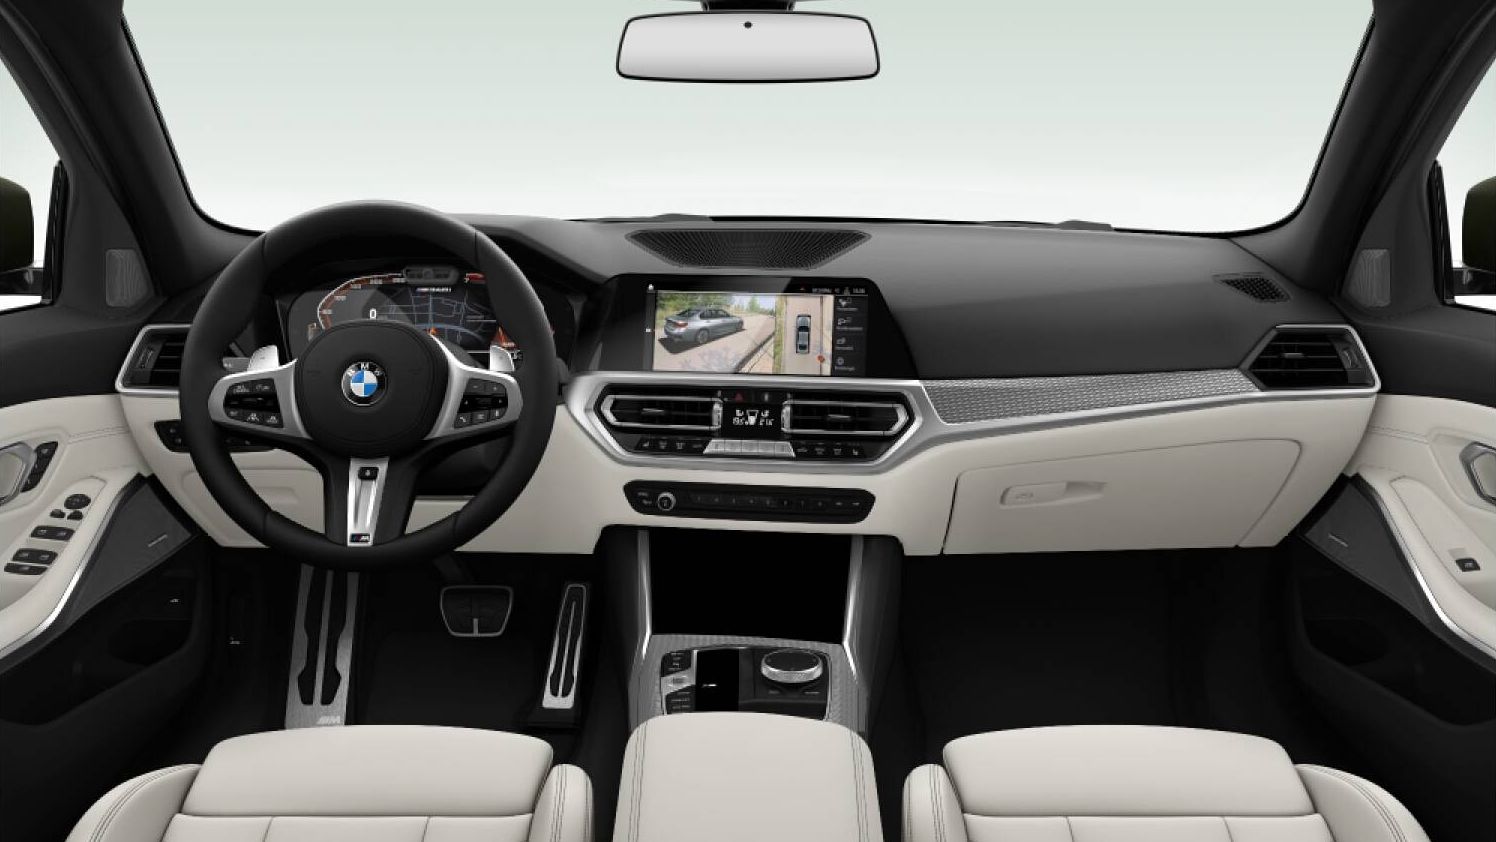 2019 BMW 3 Series interior